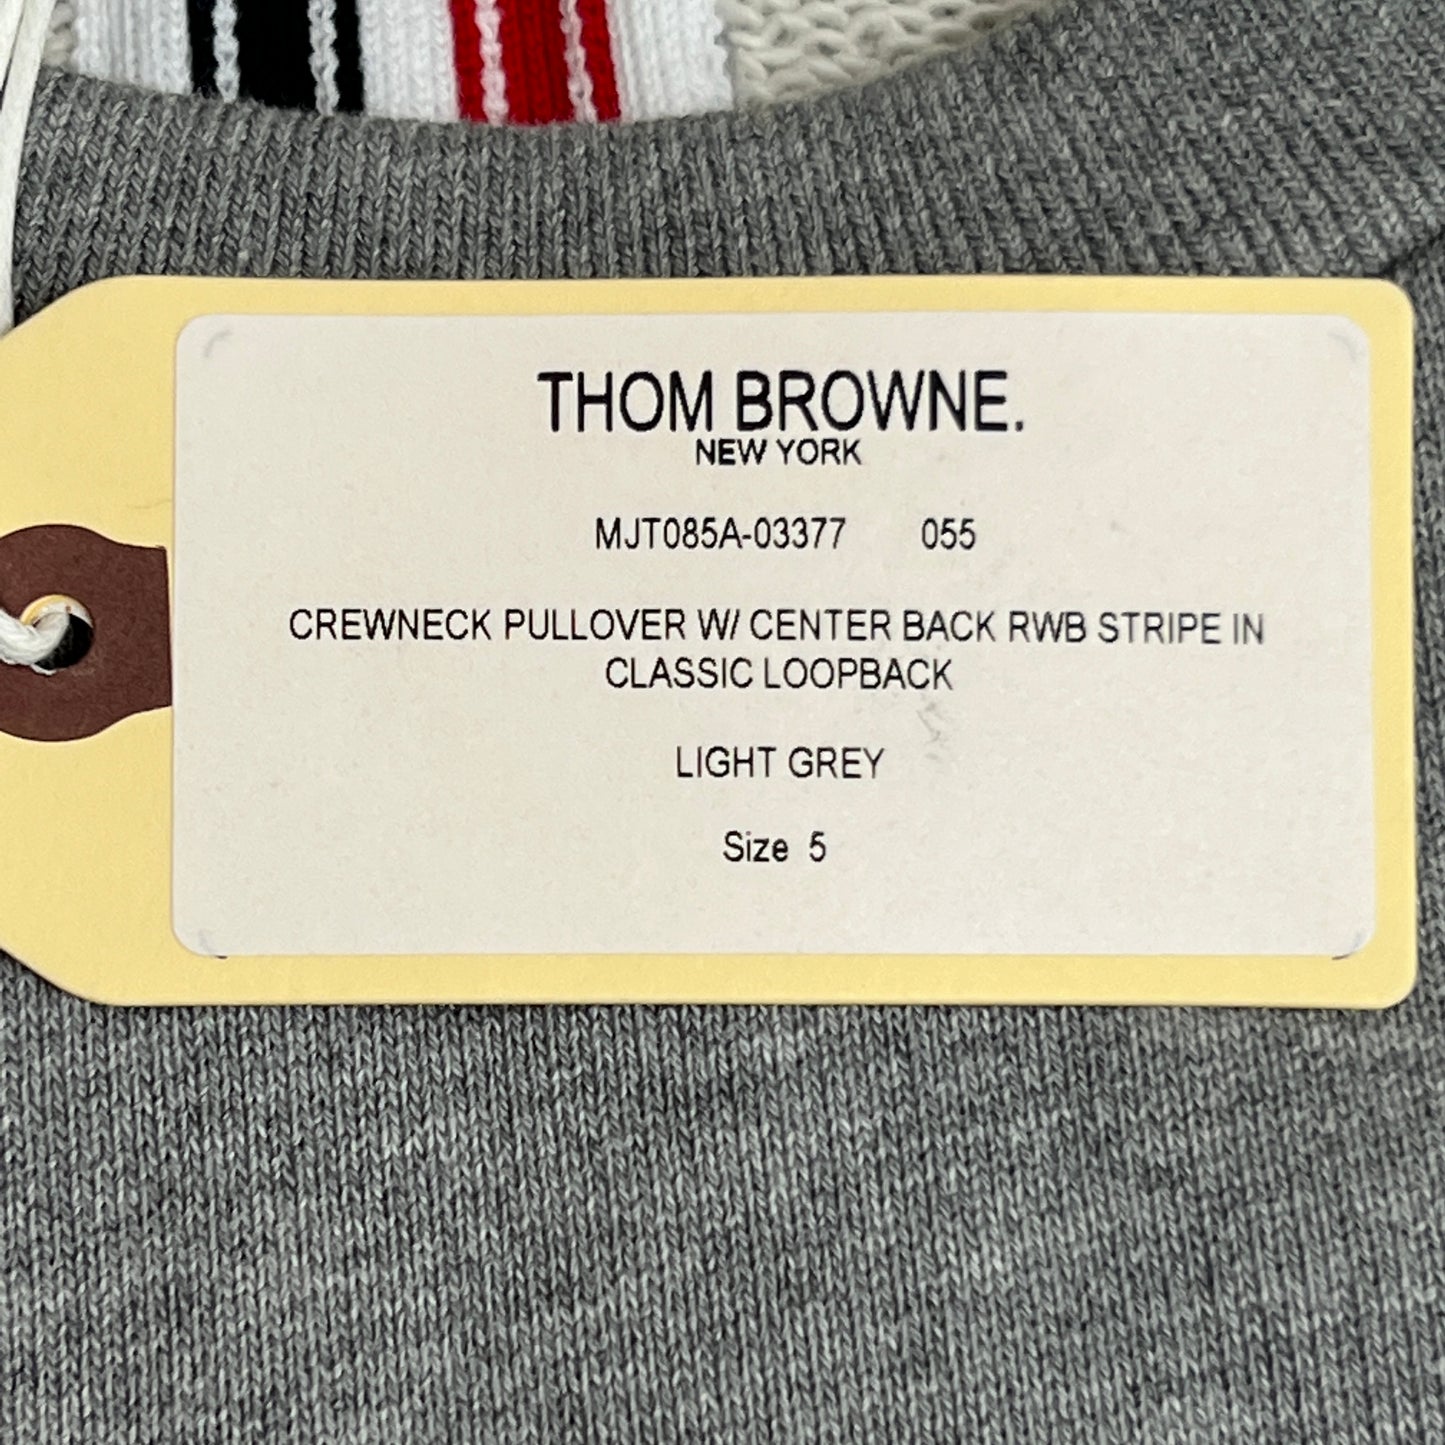 THOM BROWNE Crewneck Pullover w/Center-Back RWB Stripe in Classic Loopback Light Grey Size 5(New)